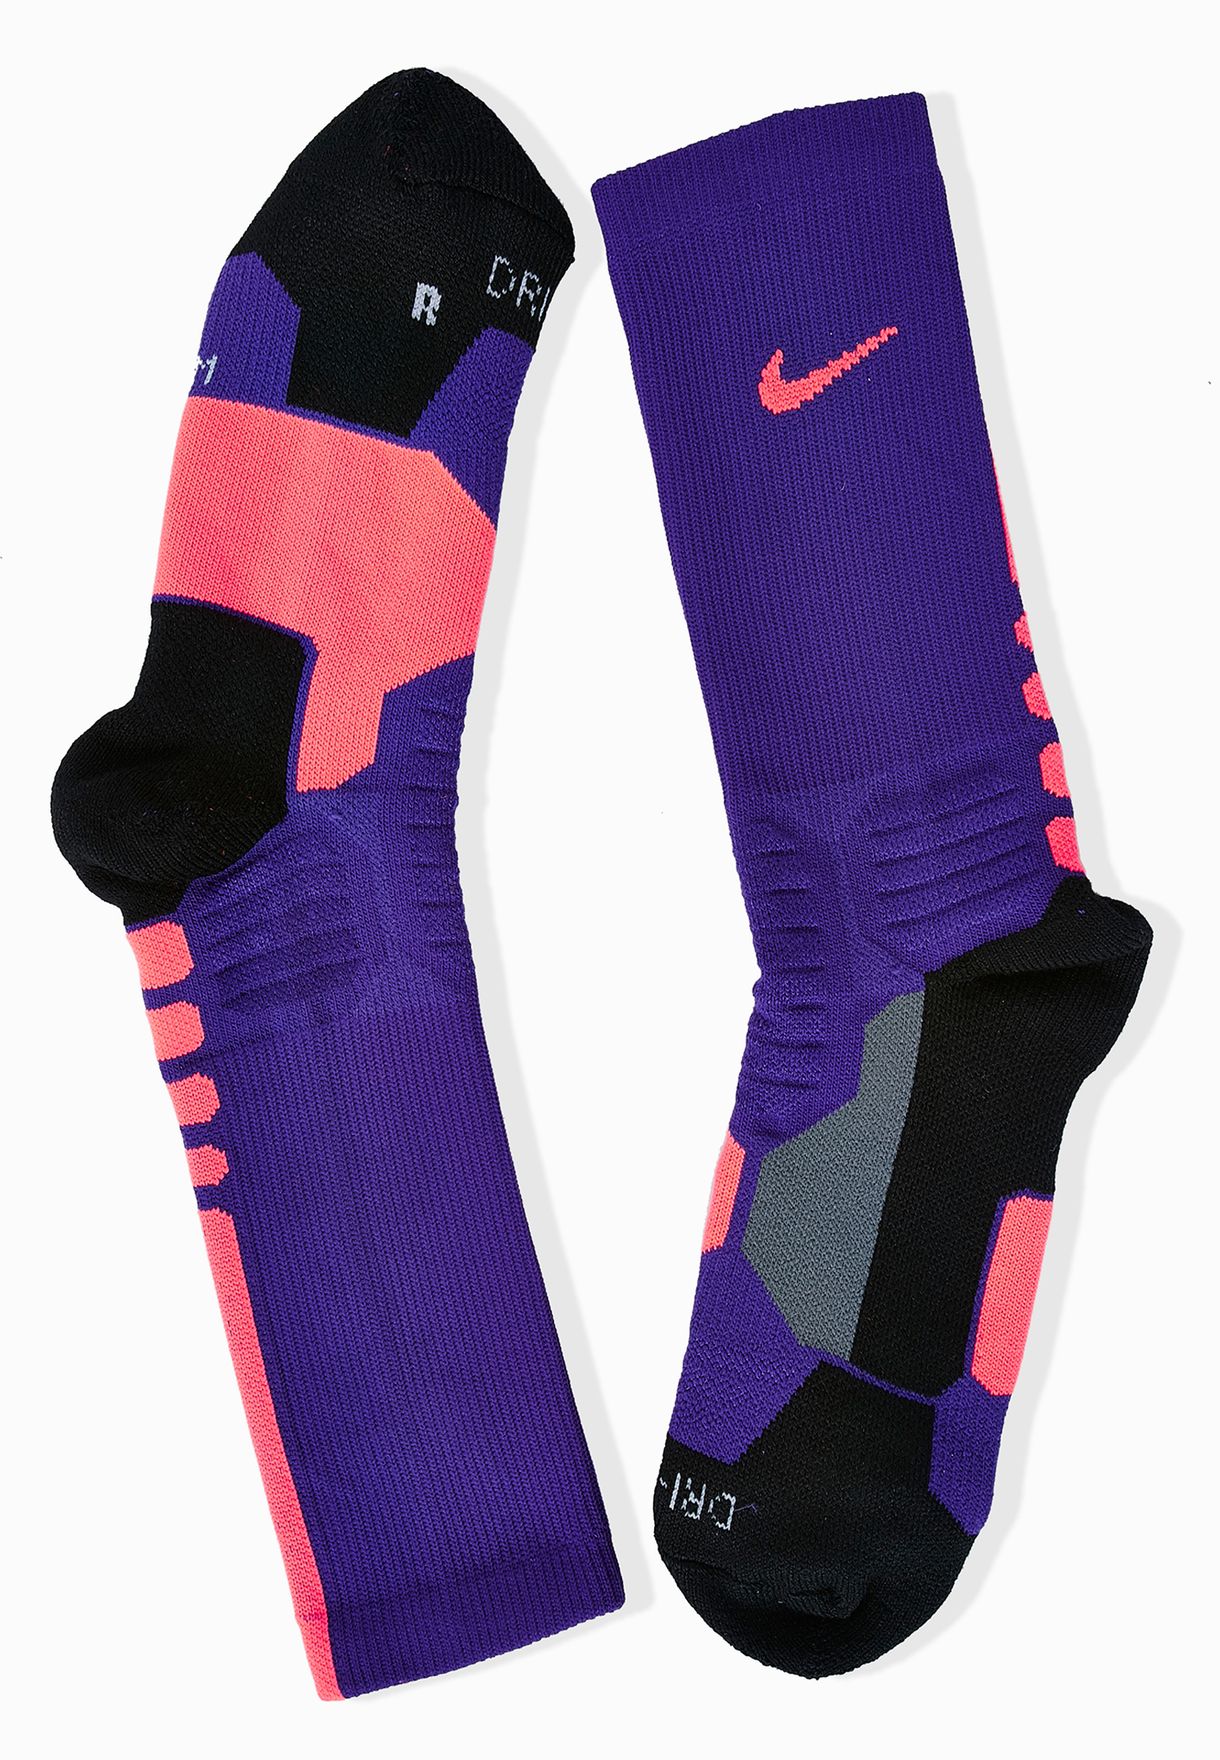 bañera medio litro Lugar de la noche Buy Nike purple Hyperelite Basketball Socks for Men in MENA, Worldwide